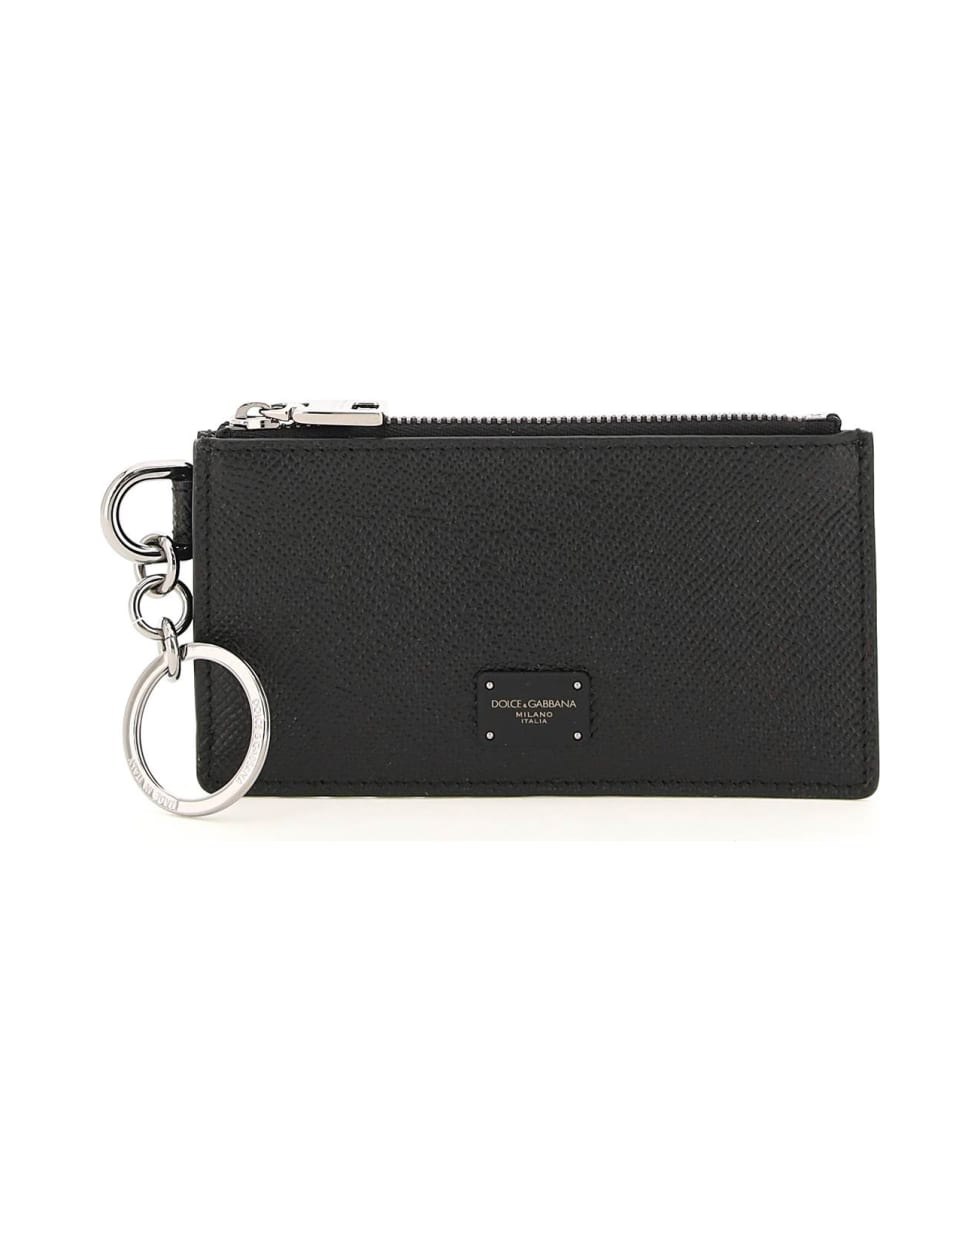 Dolce & Gabbana Cardholder With Key Ring - NERO (Black)